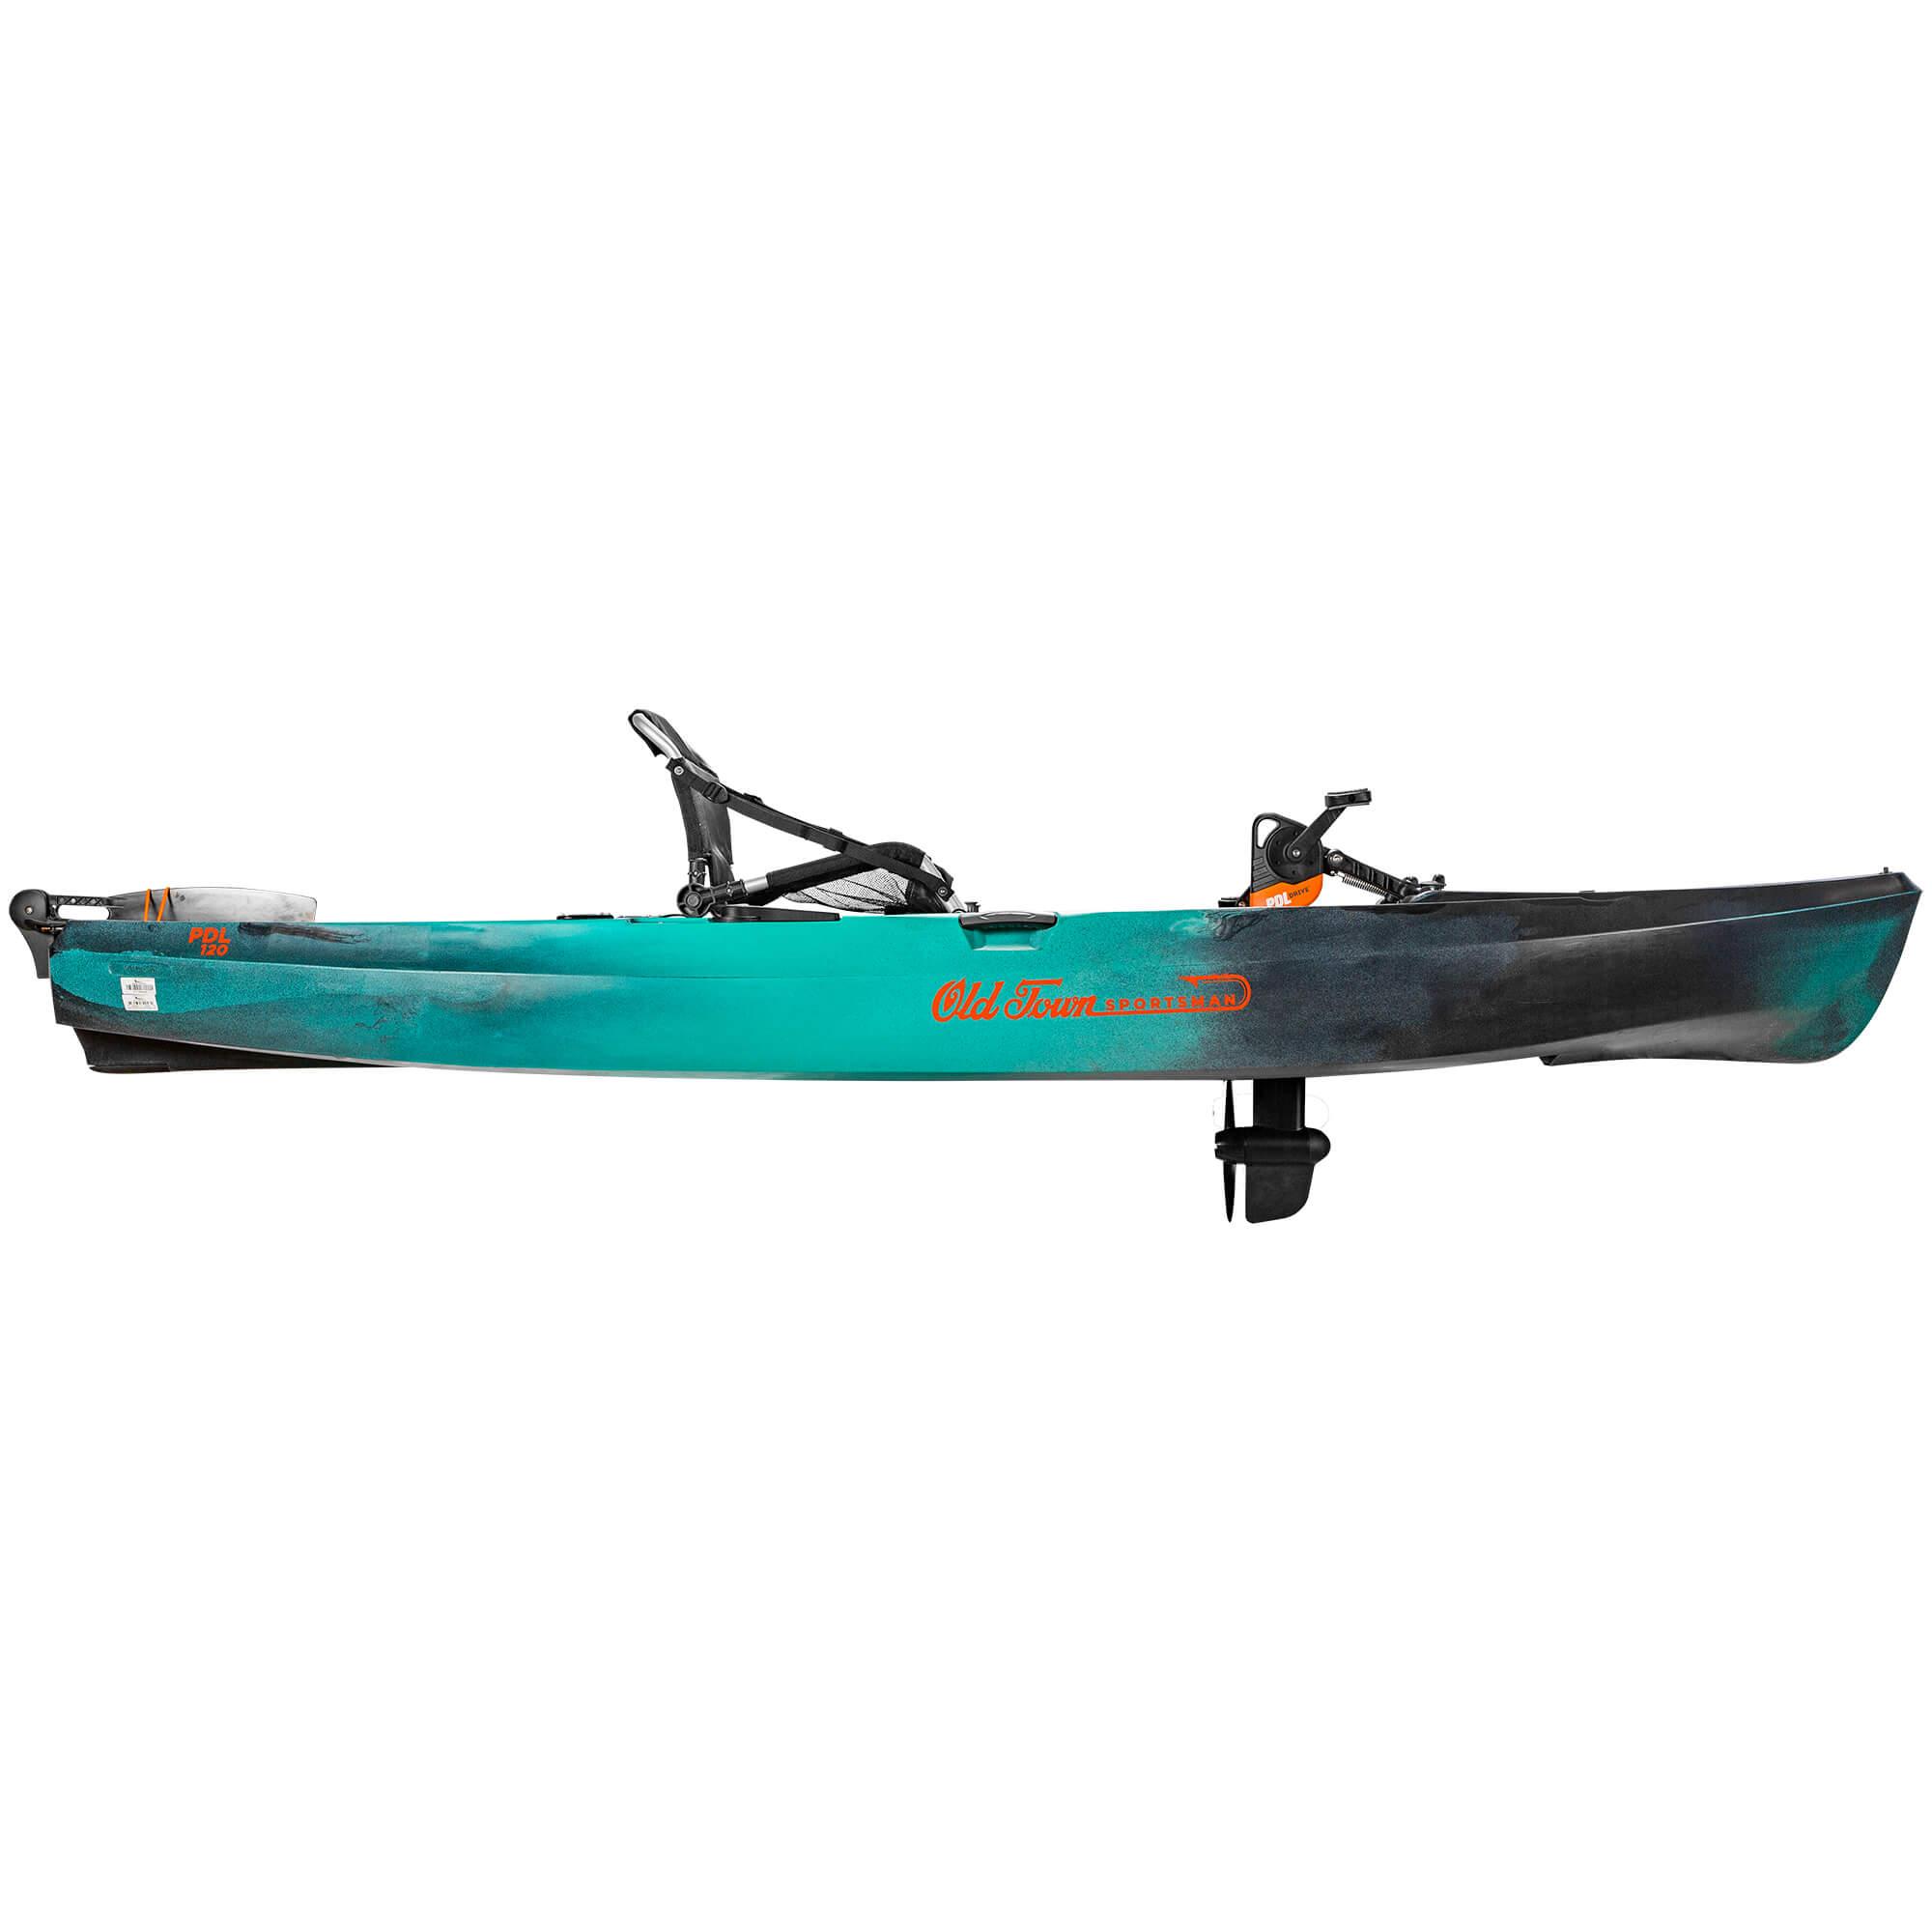 Category: Fishing Kayaks